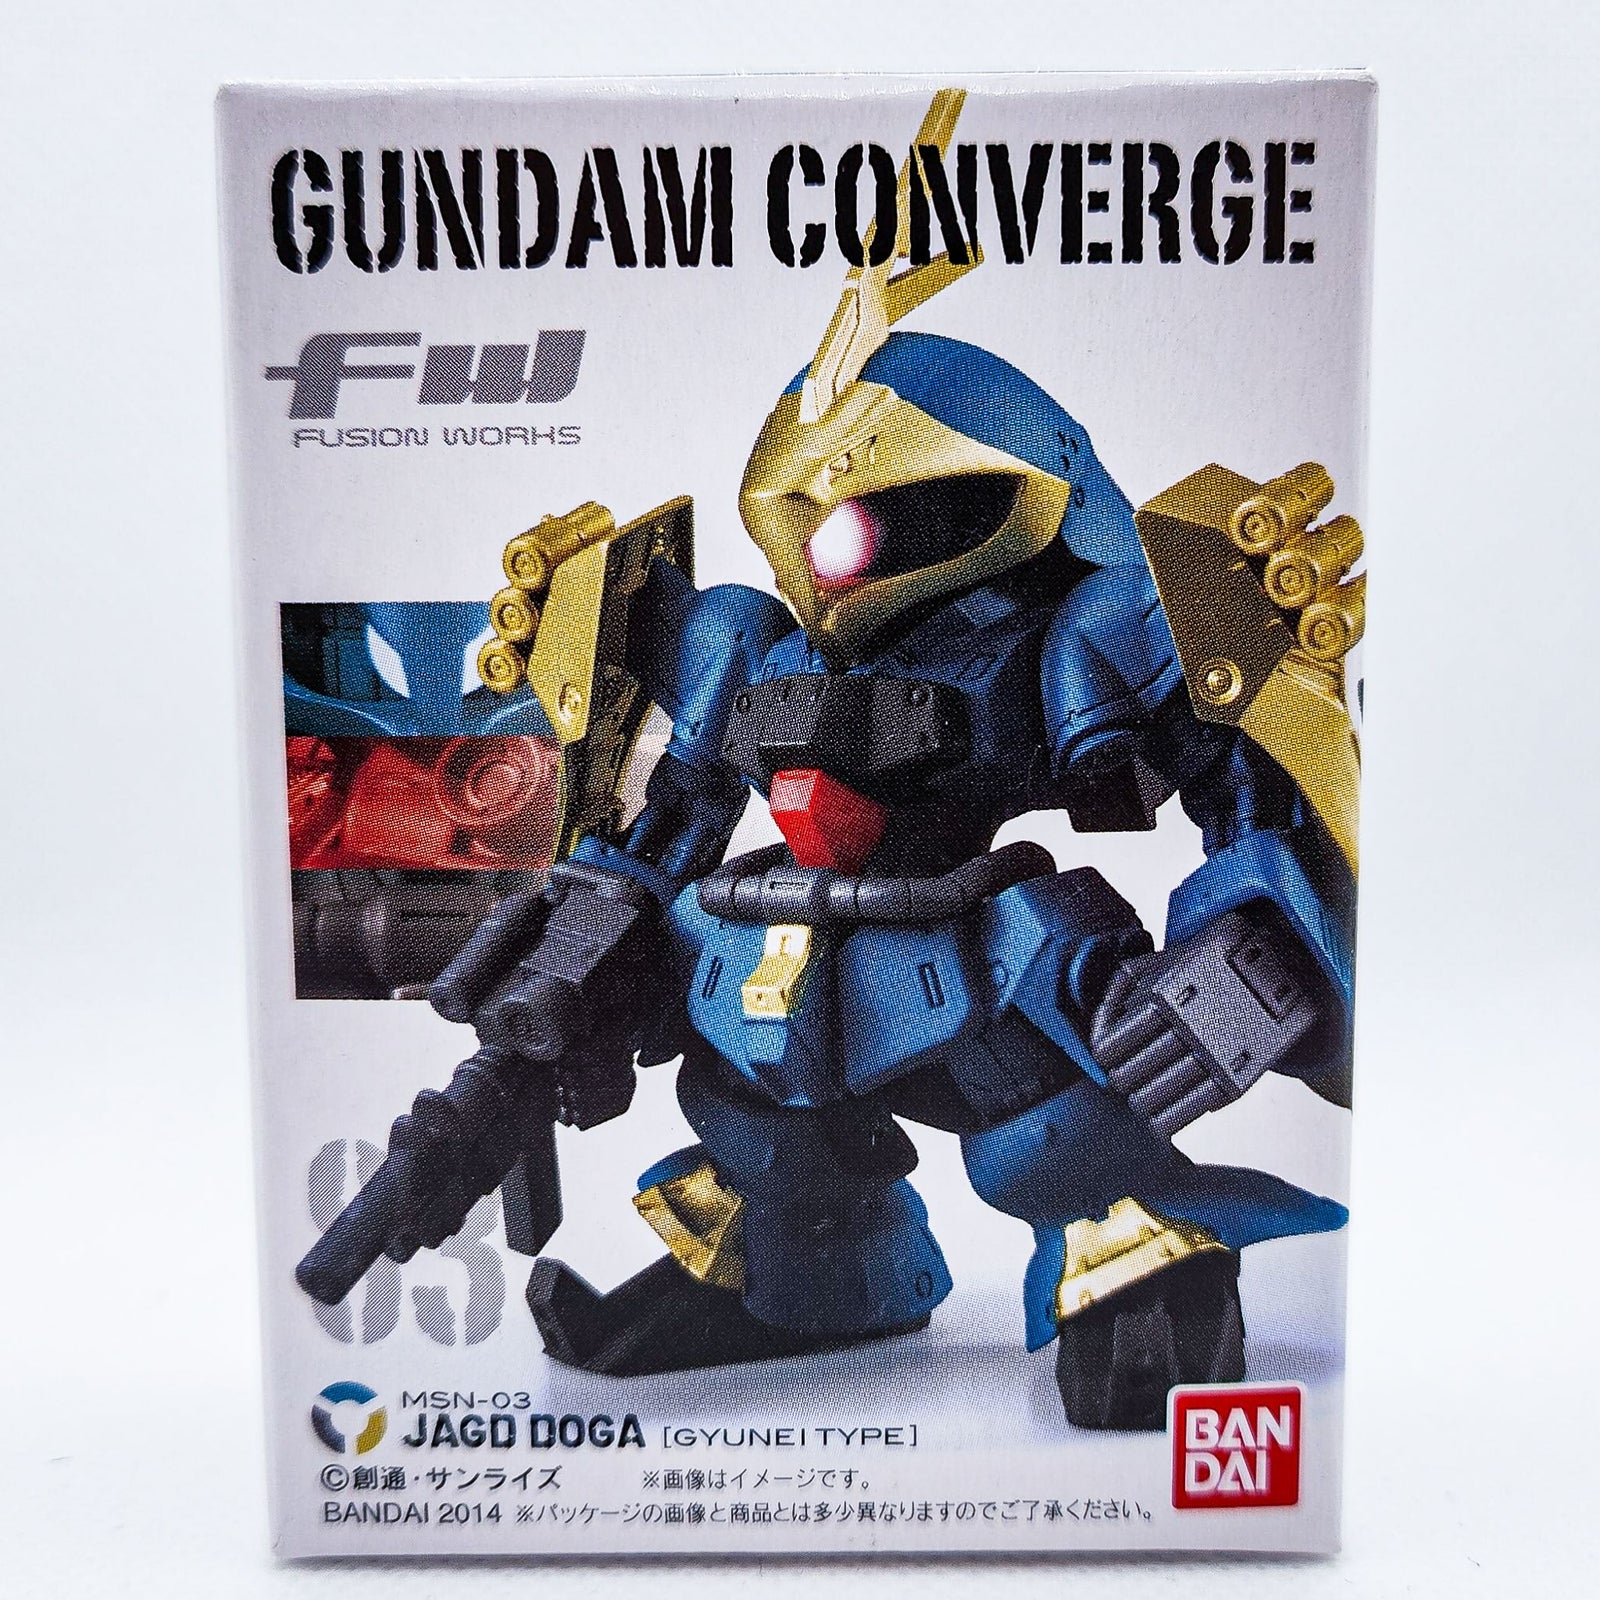 Gundam Converge #83 Jagd Doga Gyunei Version by Bandai - 1